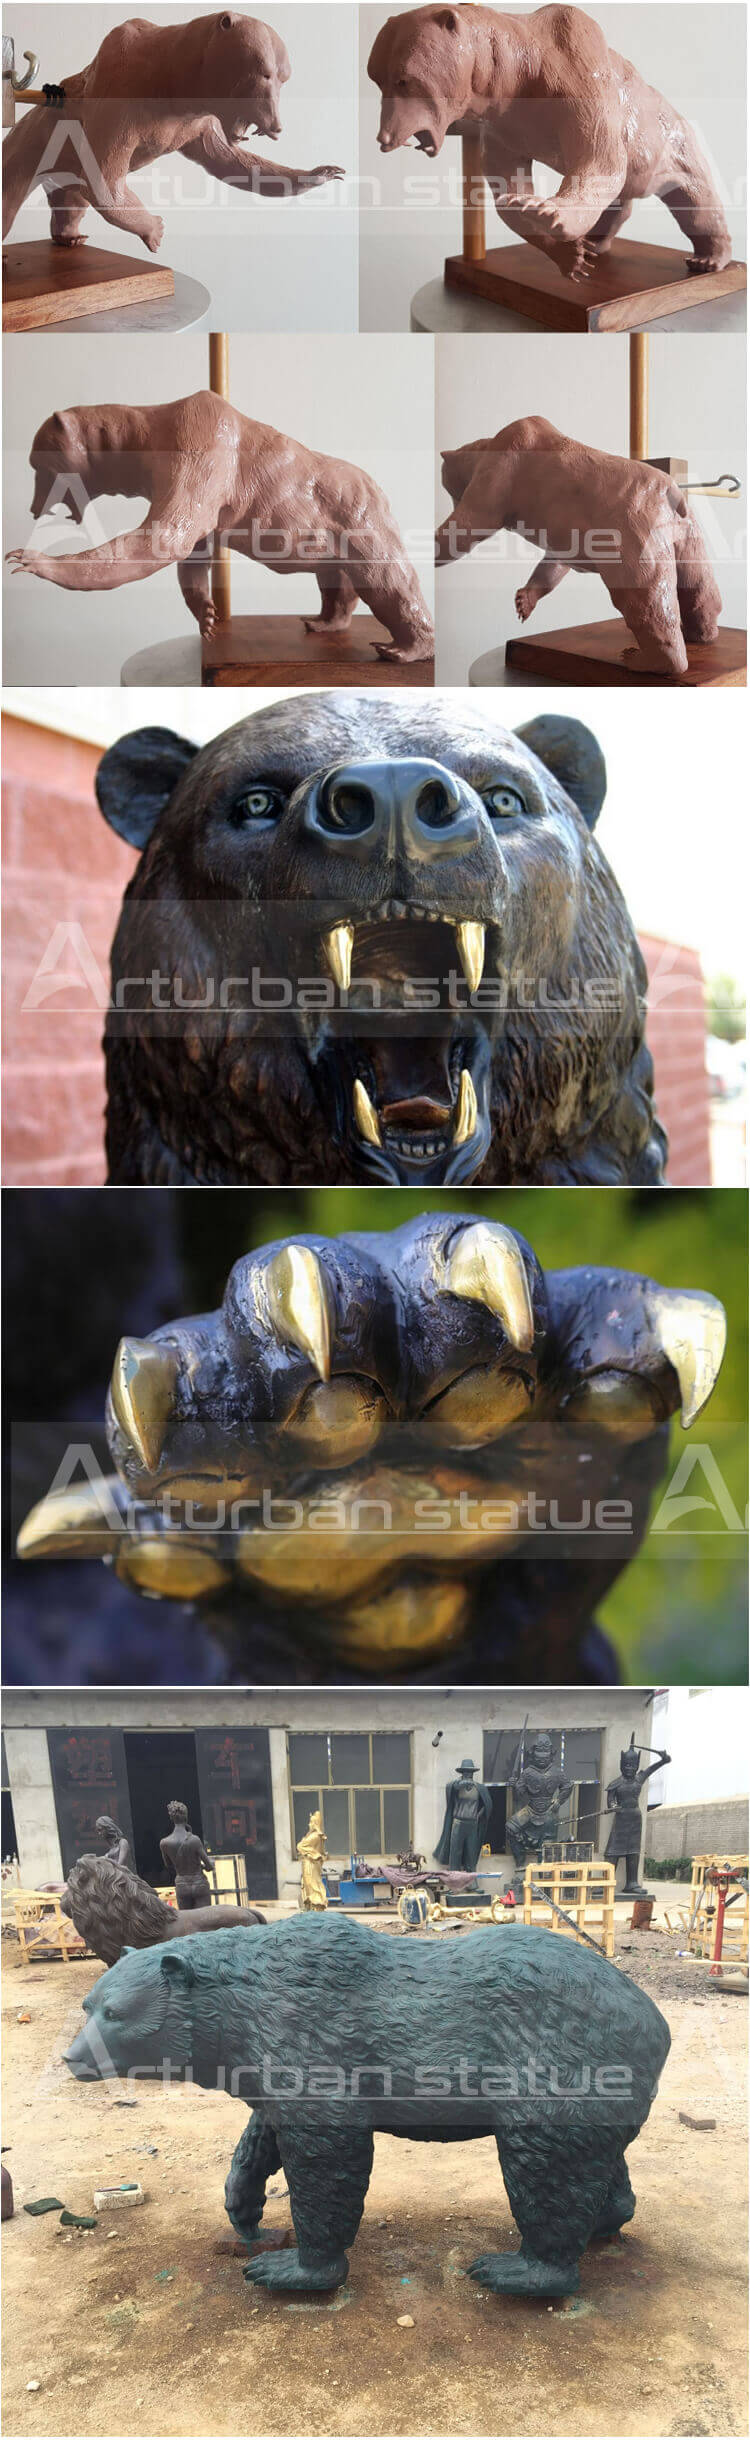 bear statue 